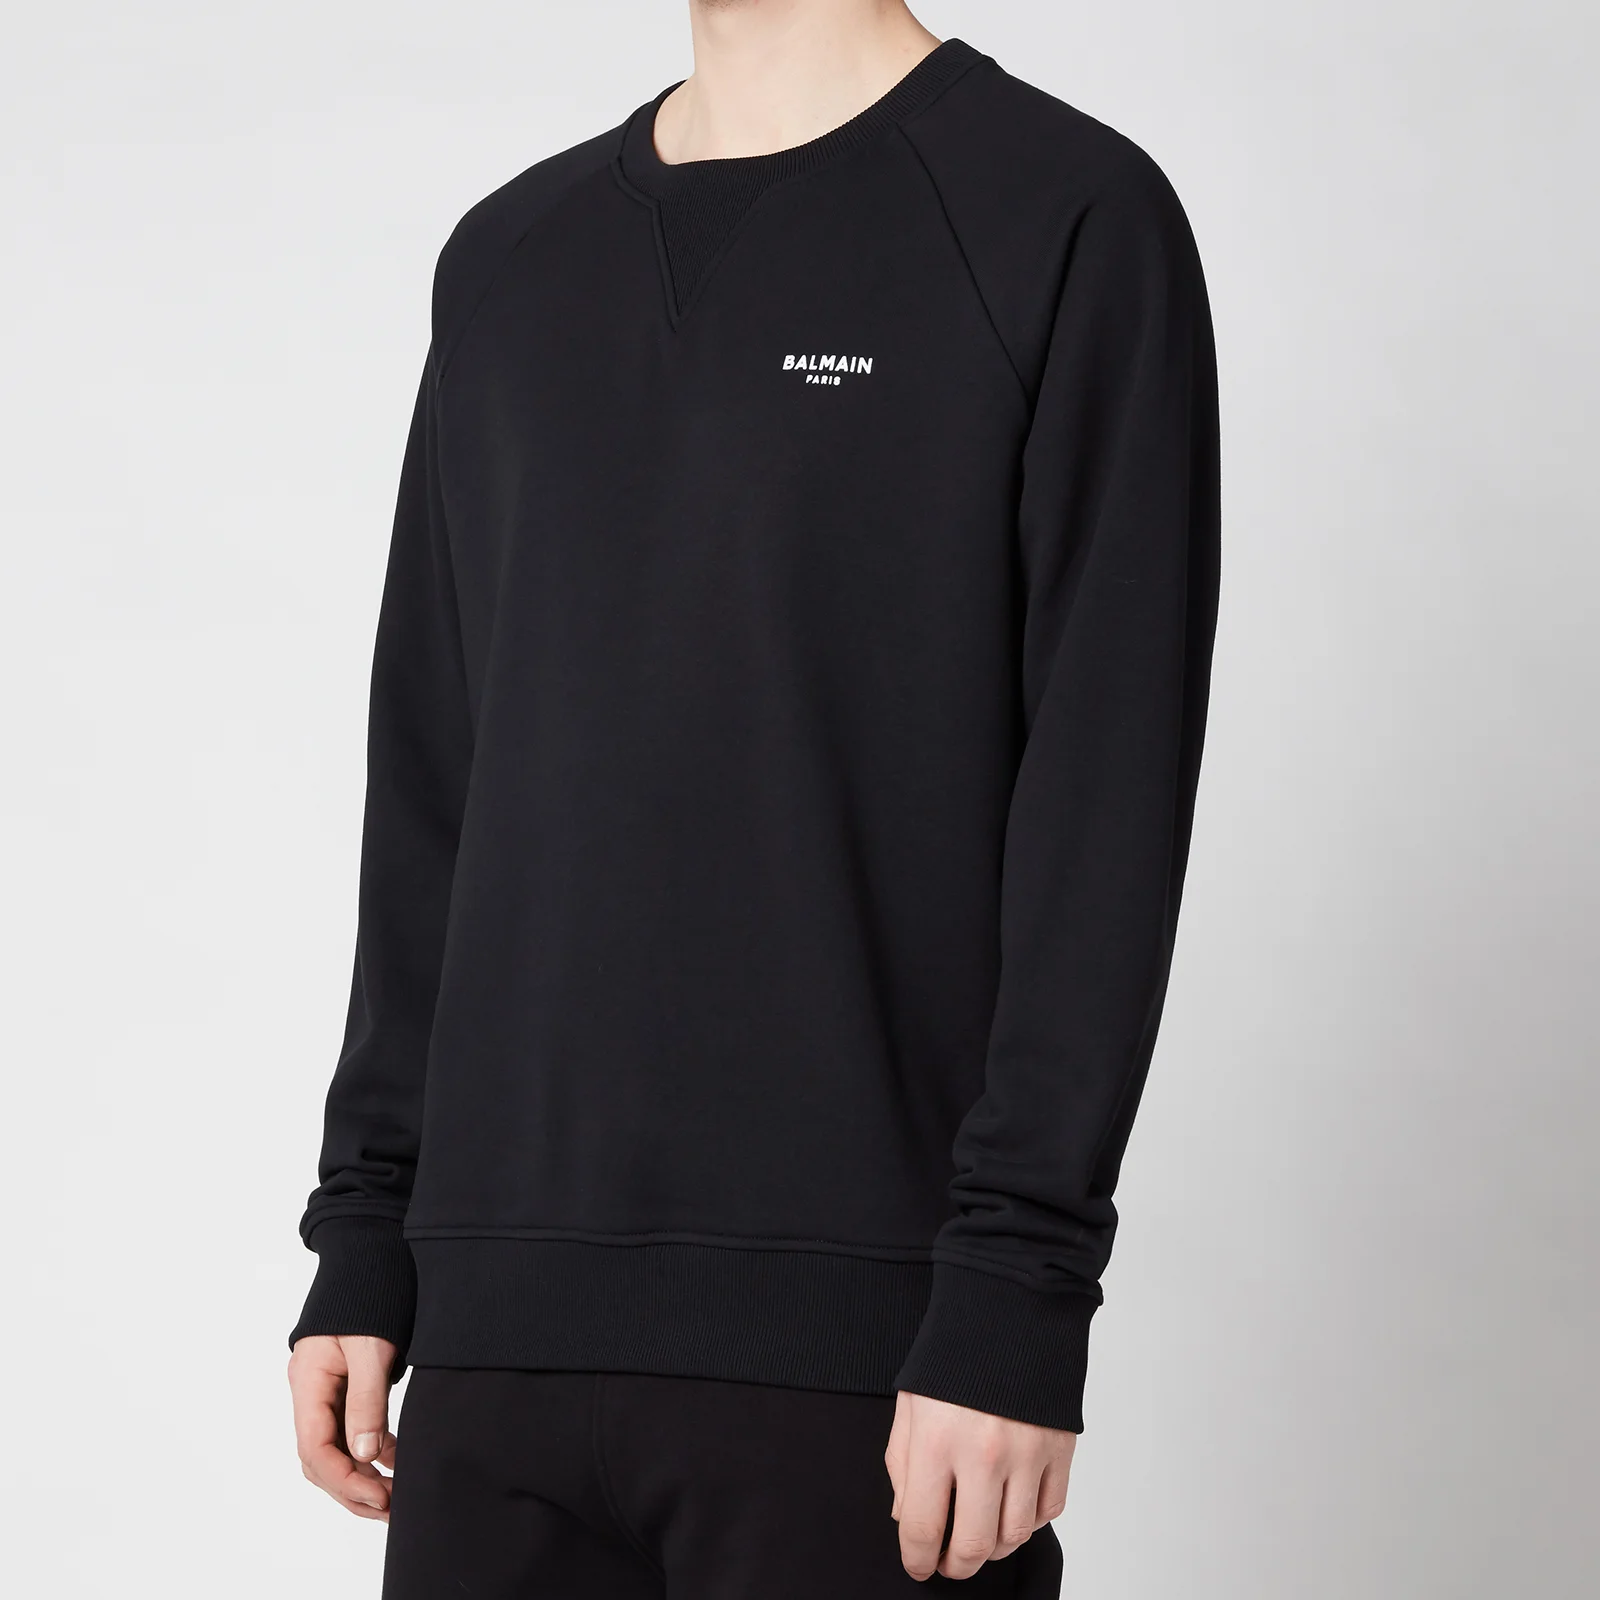 Balmain Men's Eco Design Flock Sweatshirt - Black/White Image 1